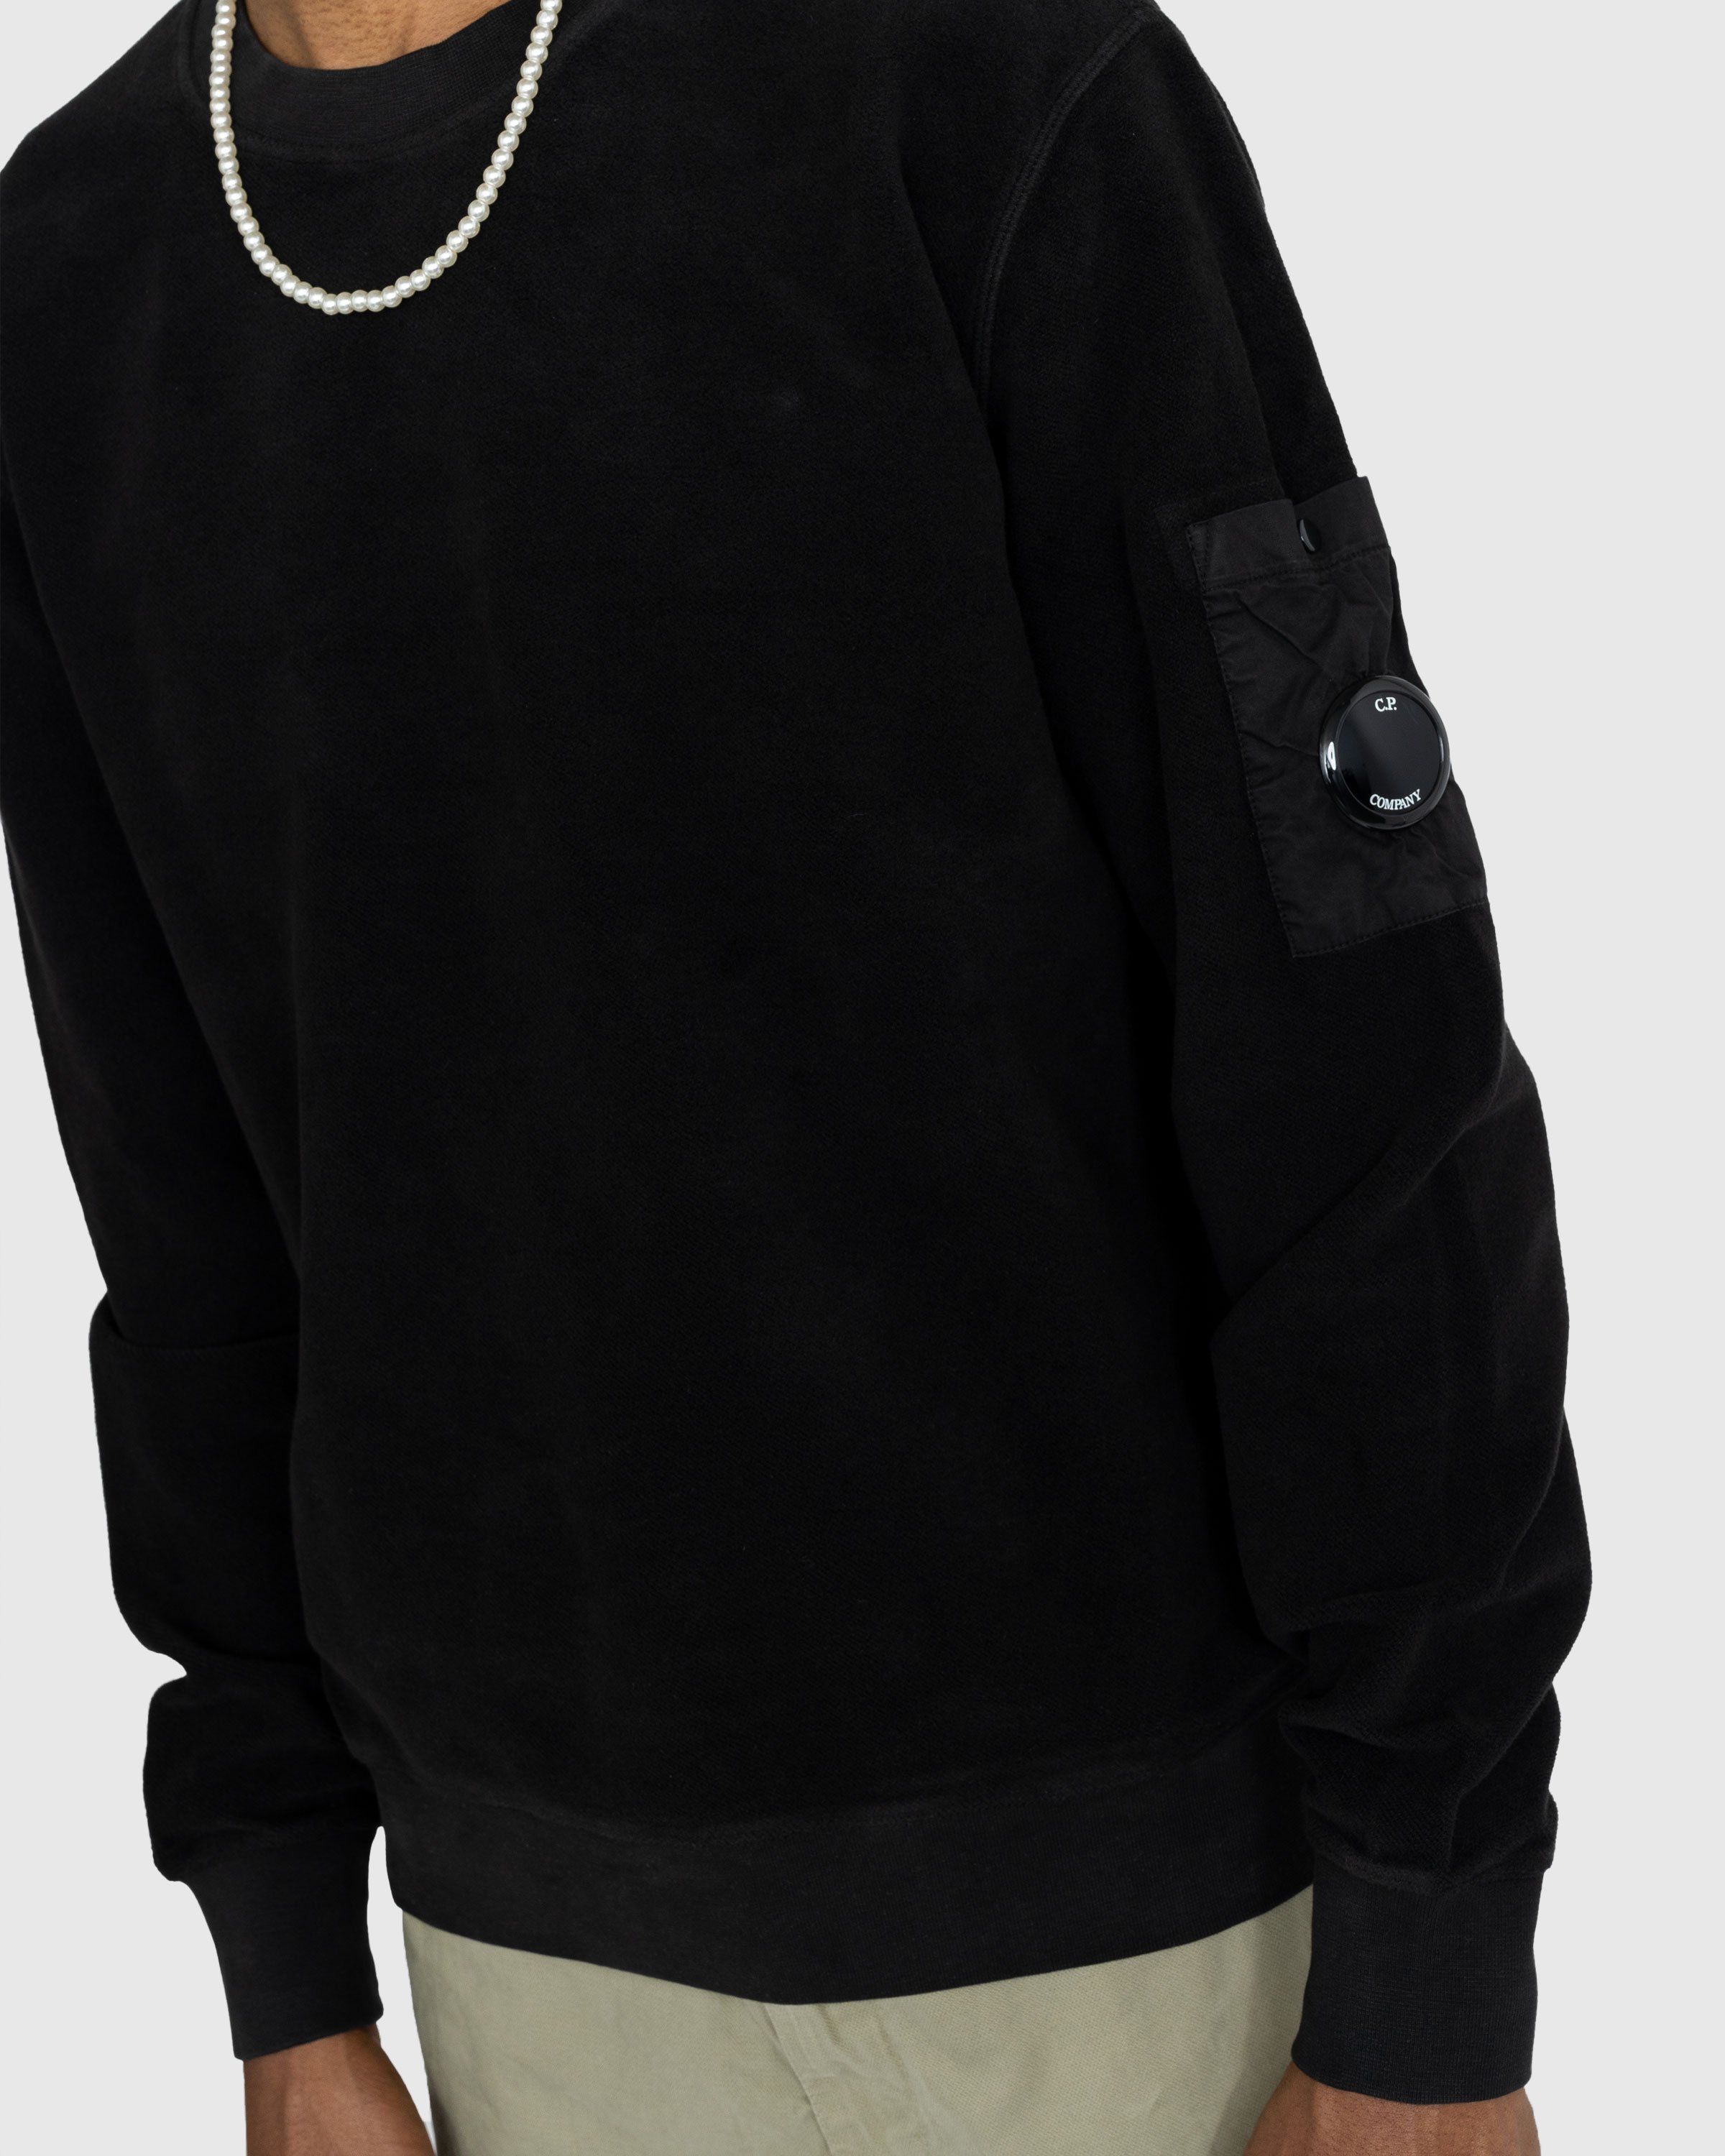 C.P. Company - Sweatshirts - Crew Neck - Clothing - Black - Image 4